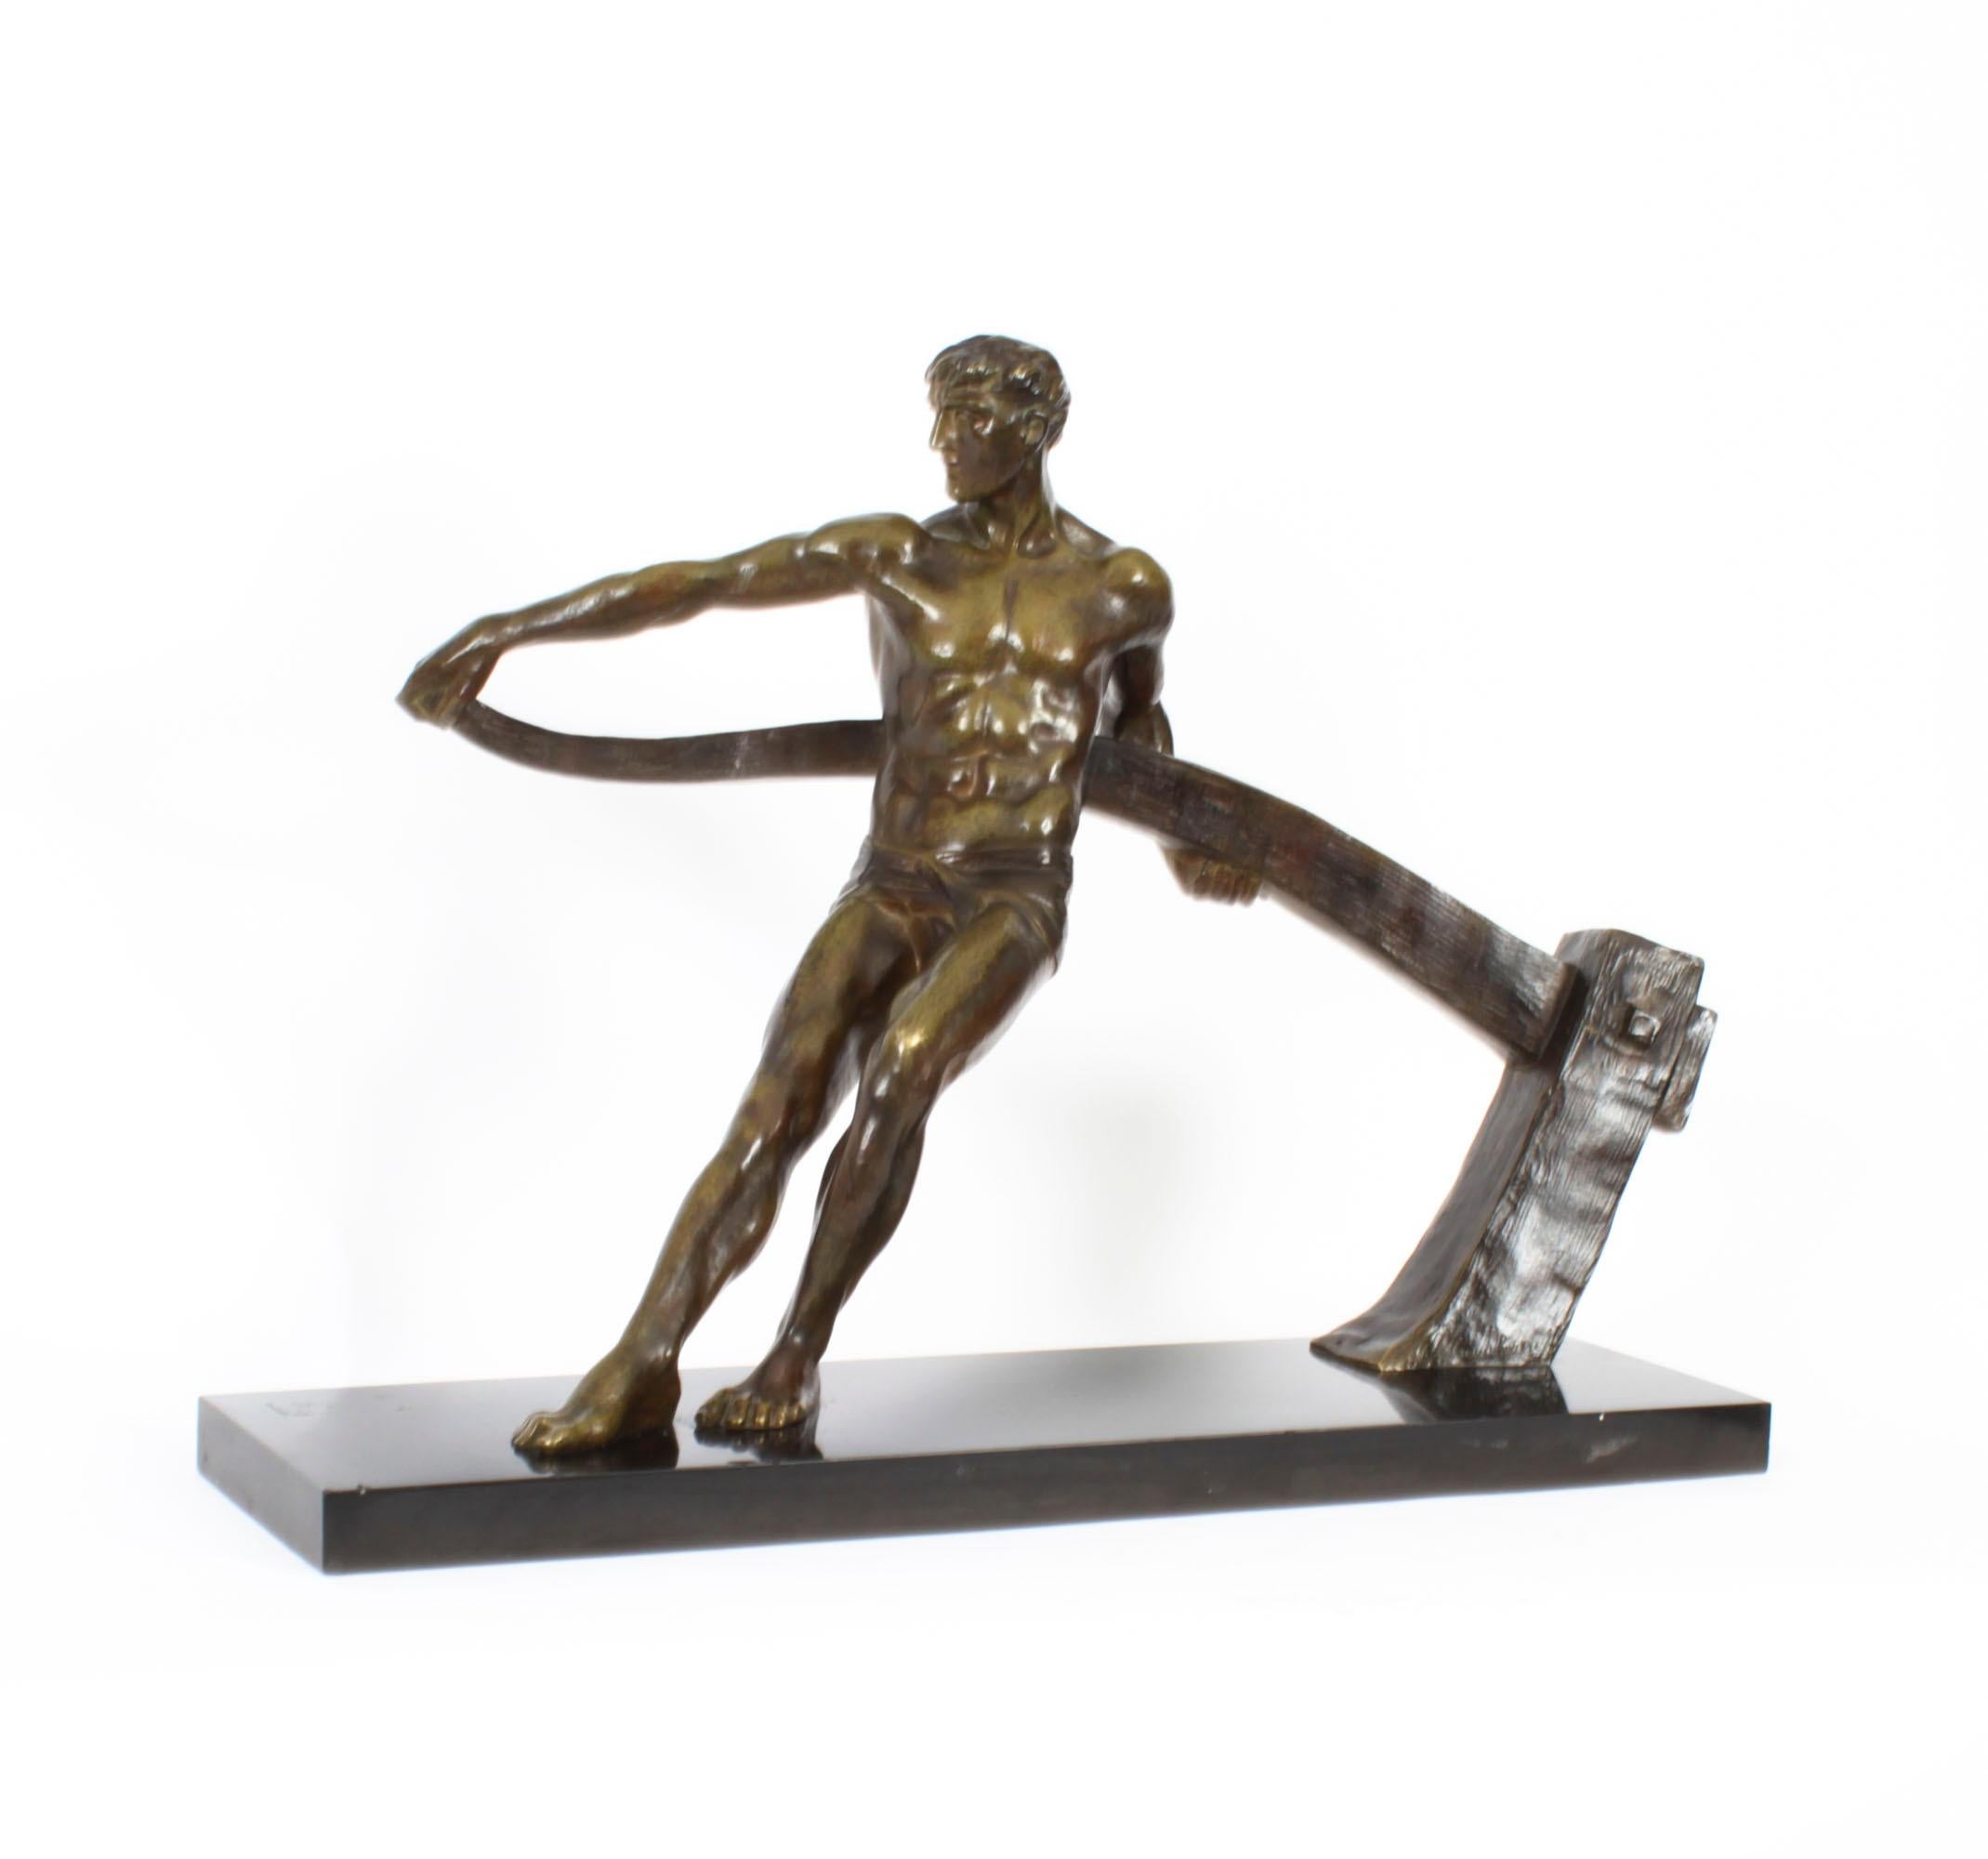 Antique Art Deco Bronze Figure of a Riverman by Maurice Guiraud-Rivière 1920s For Sale 6